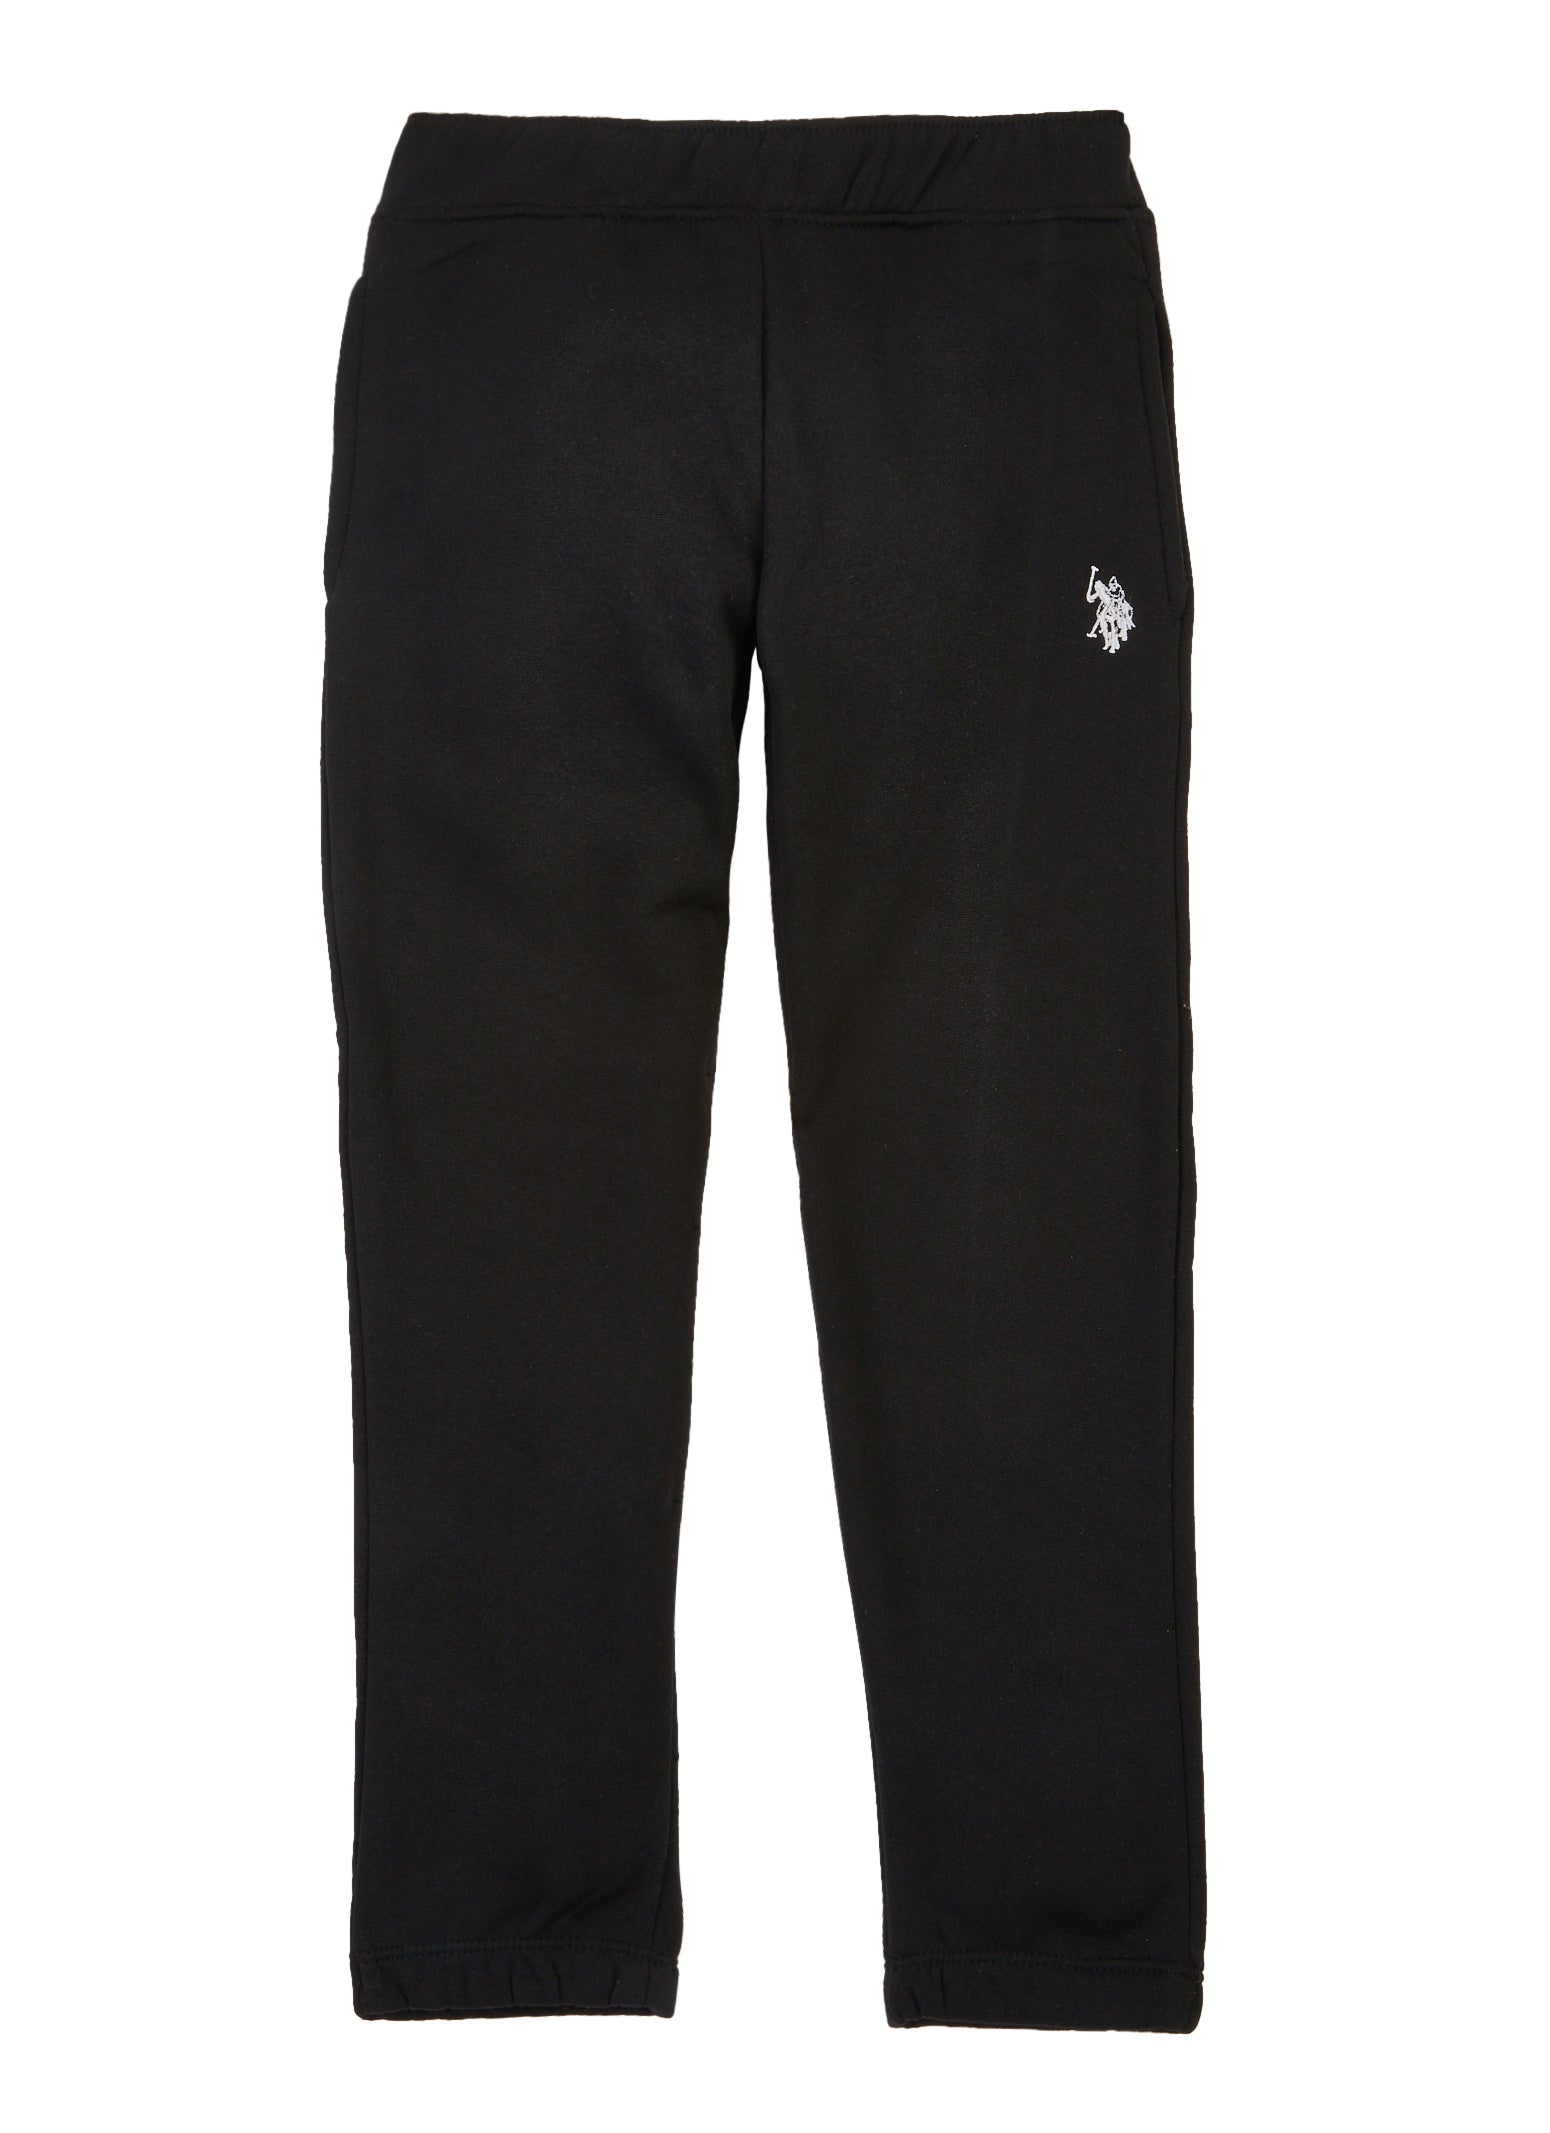 US Polo Boys 4-7 Black Gym Sweatpants